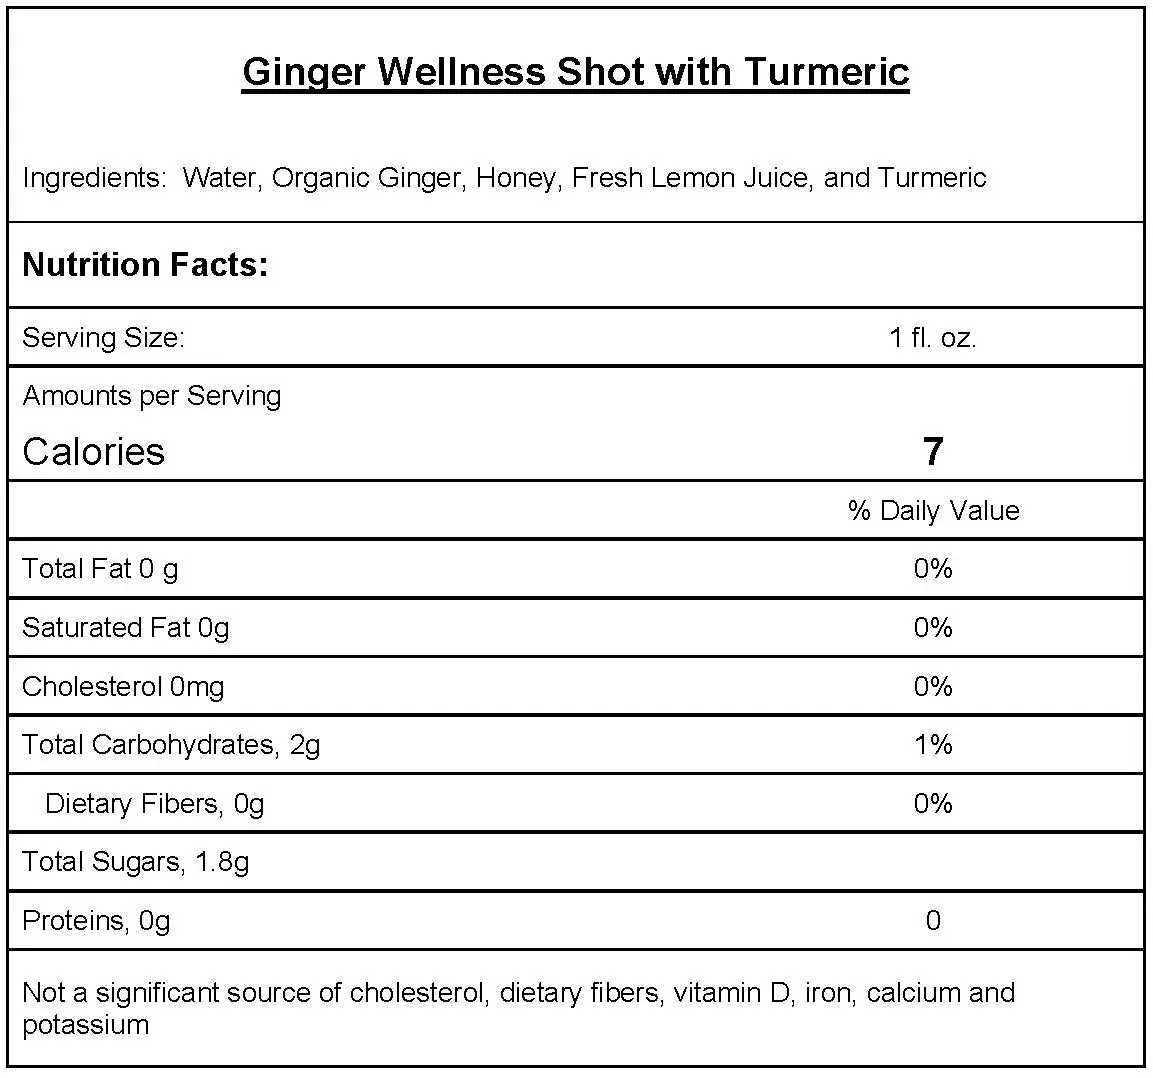 Nutritional Facts GWS Turmeric